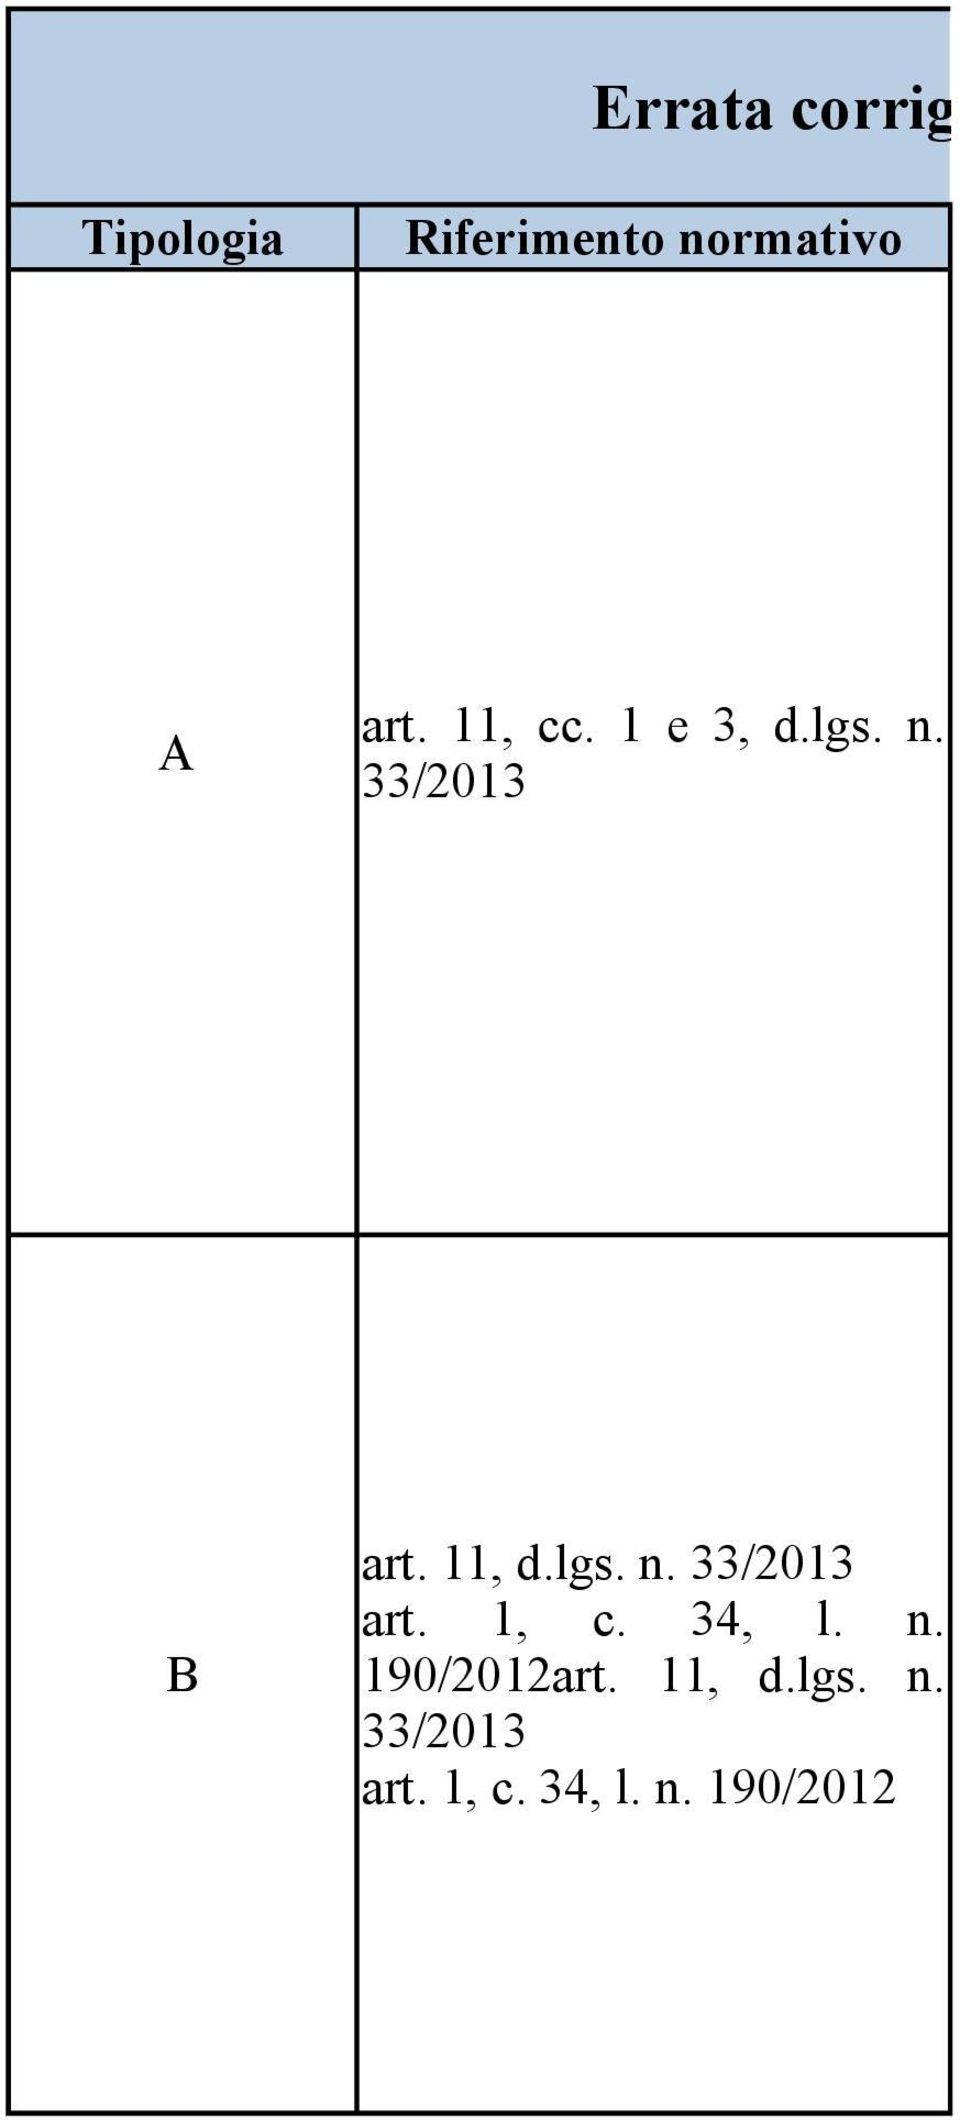 (settembre 2013) Riferimento normativo A art. 11, cc. 1 e 3, d.lgs. n. B art.